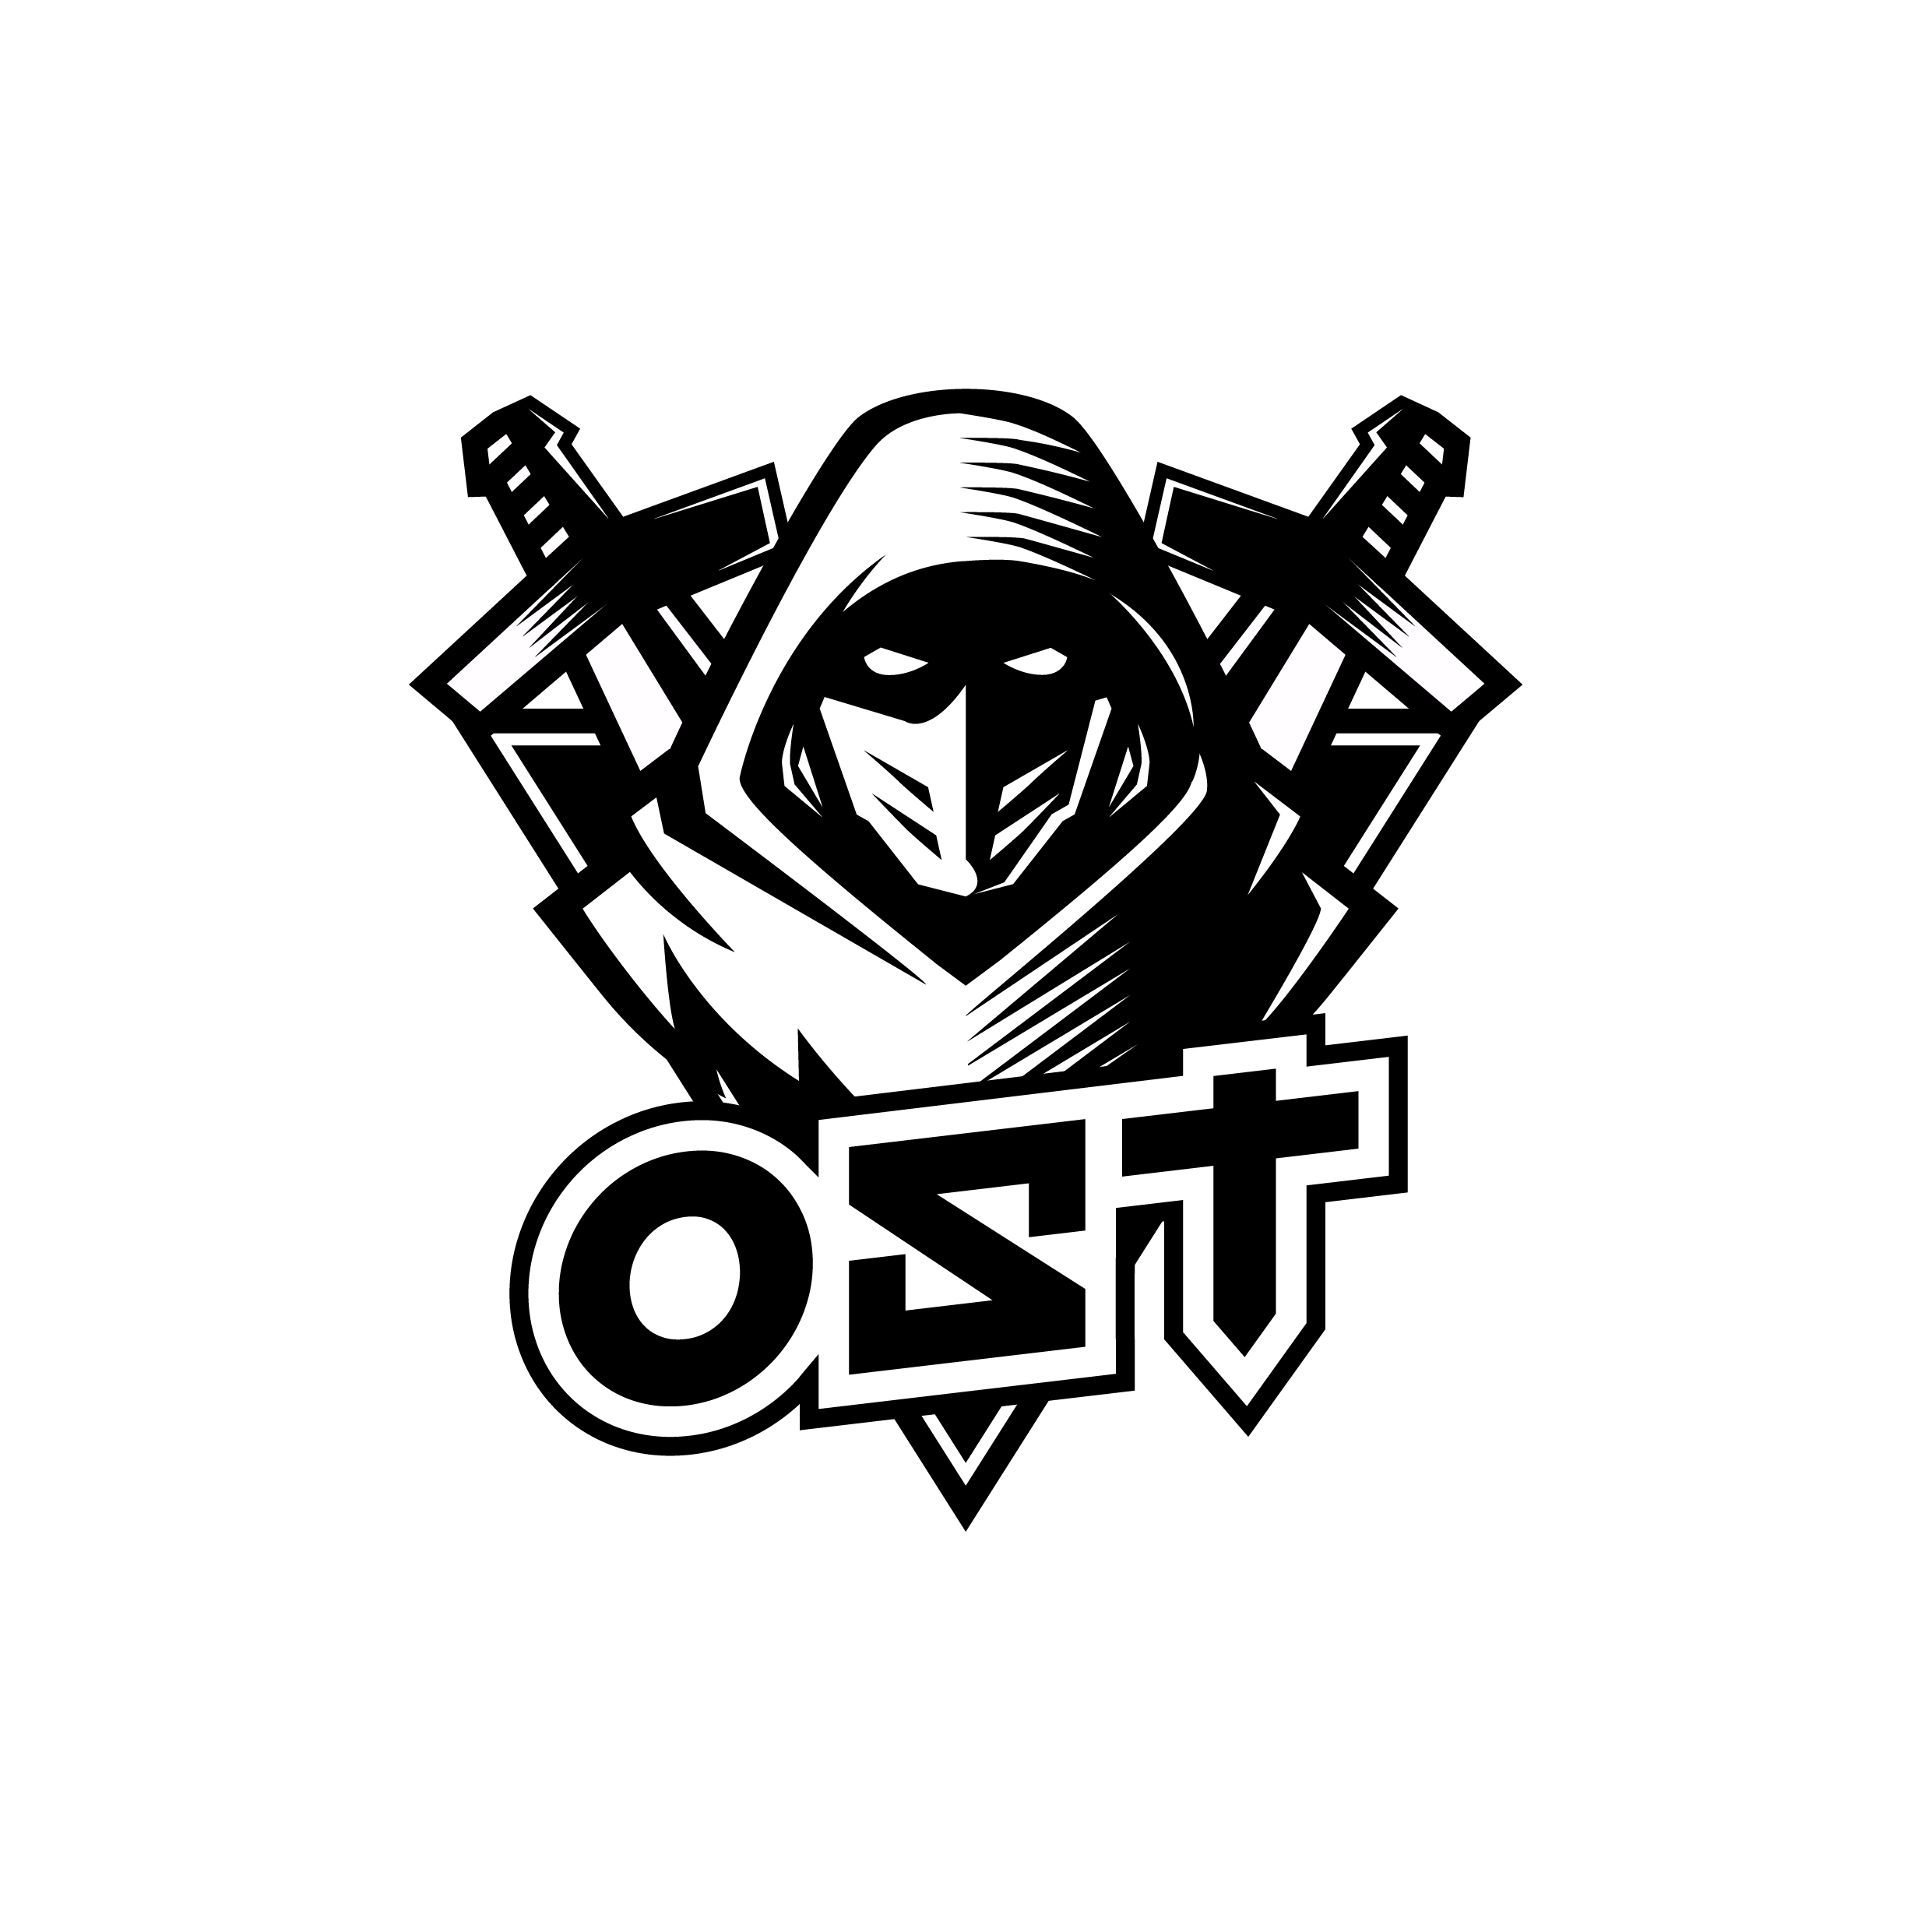 ost电子竞技俱乐部:我们的战队logo由你决定